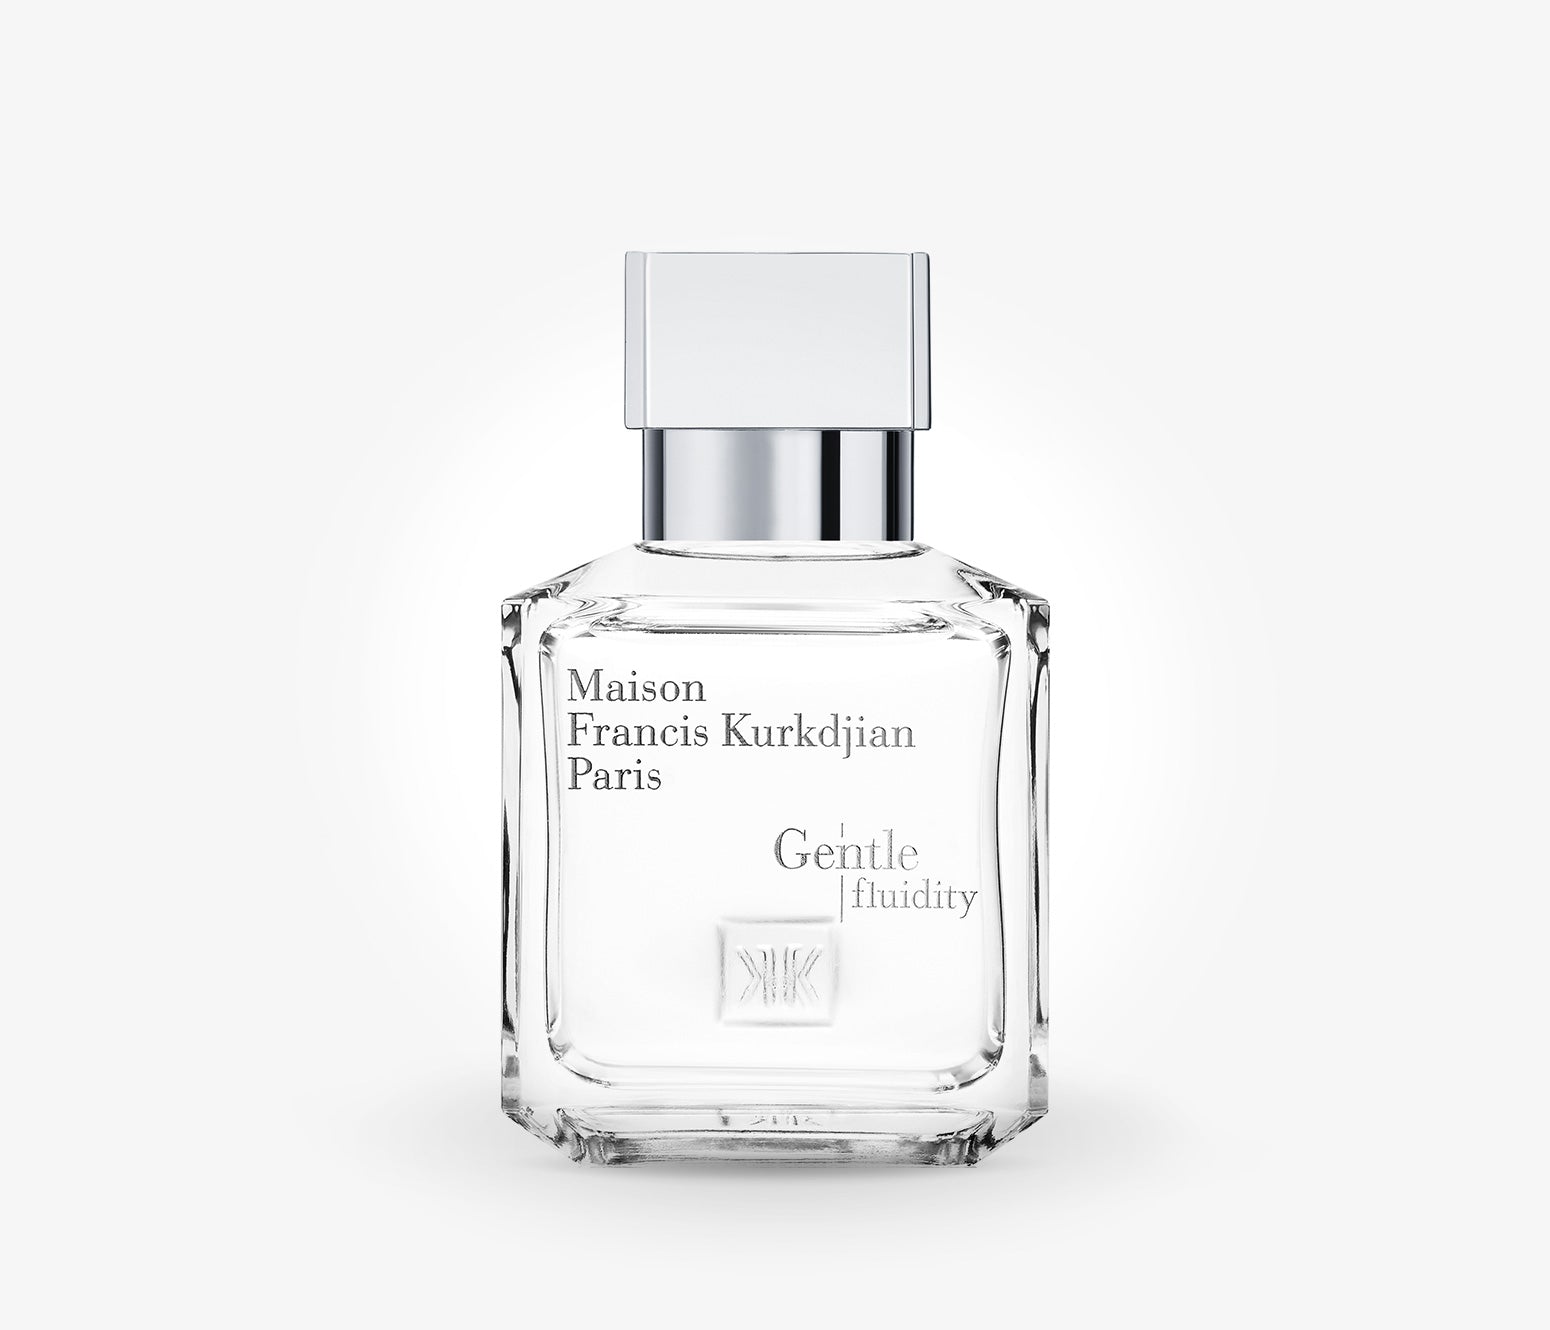 Maison Francis Kurkdjian - Gentle Fluidity (silver edition) - 70ml - DWZ001 - product image - Fragrance - Les Senteurs